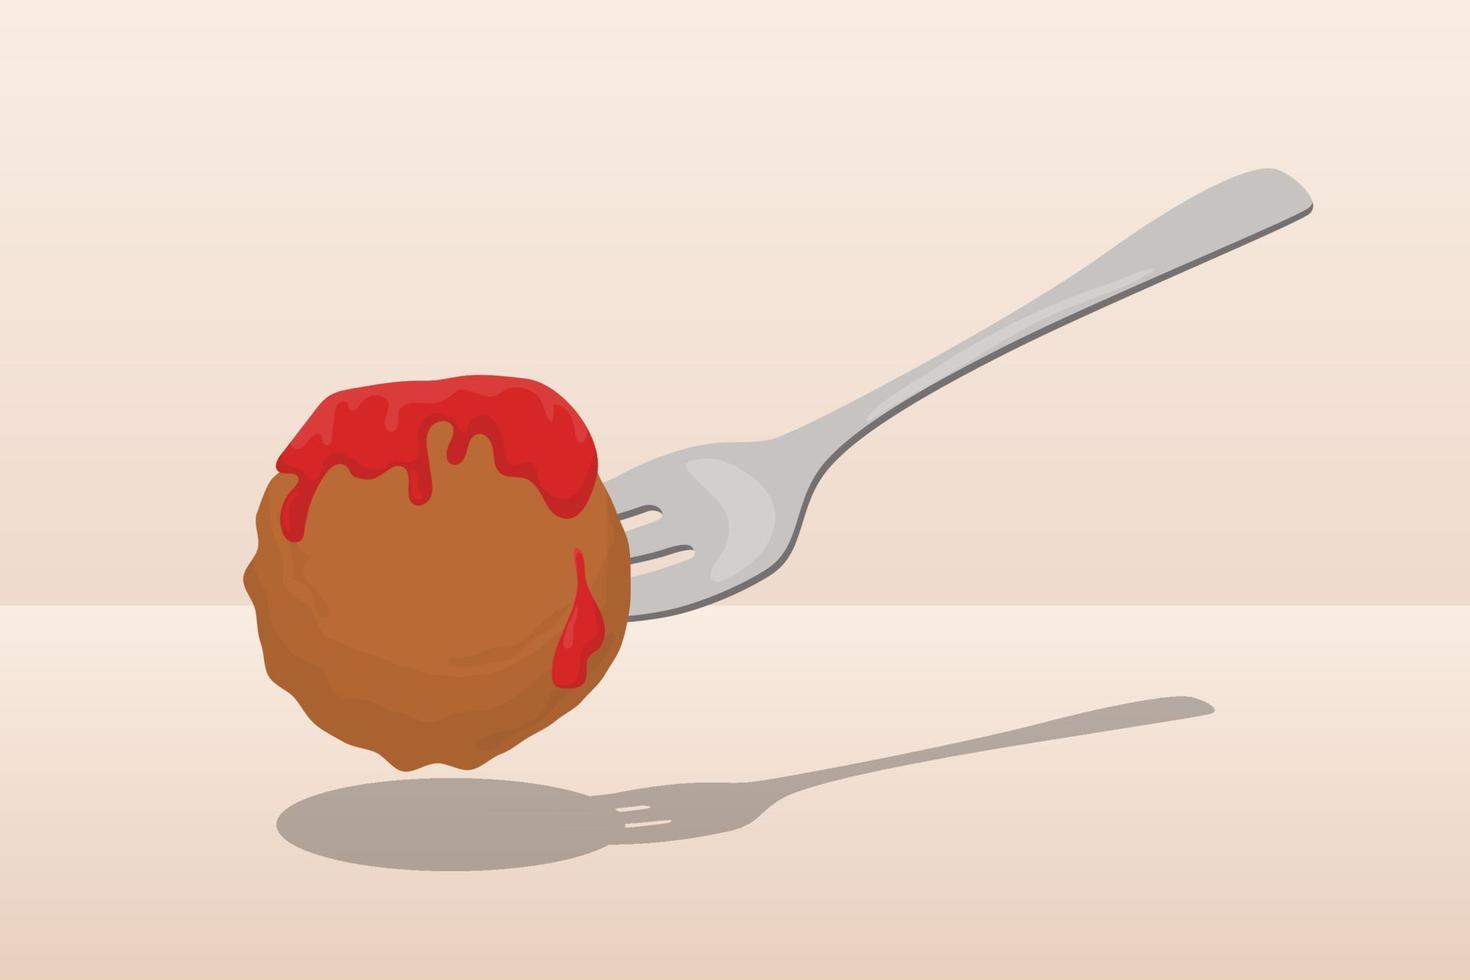 Delicious meatball illustration in vector design